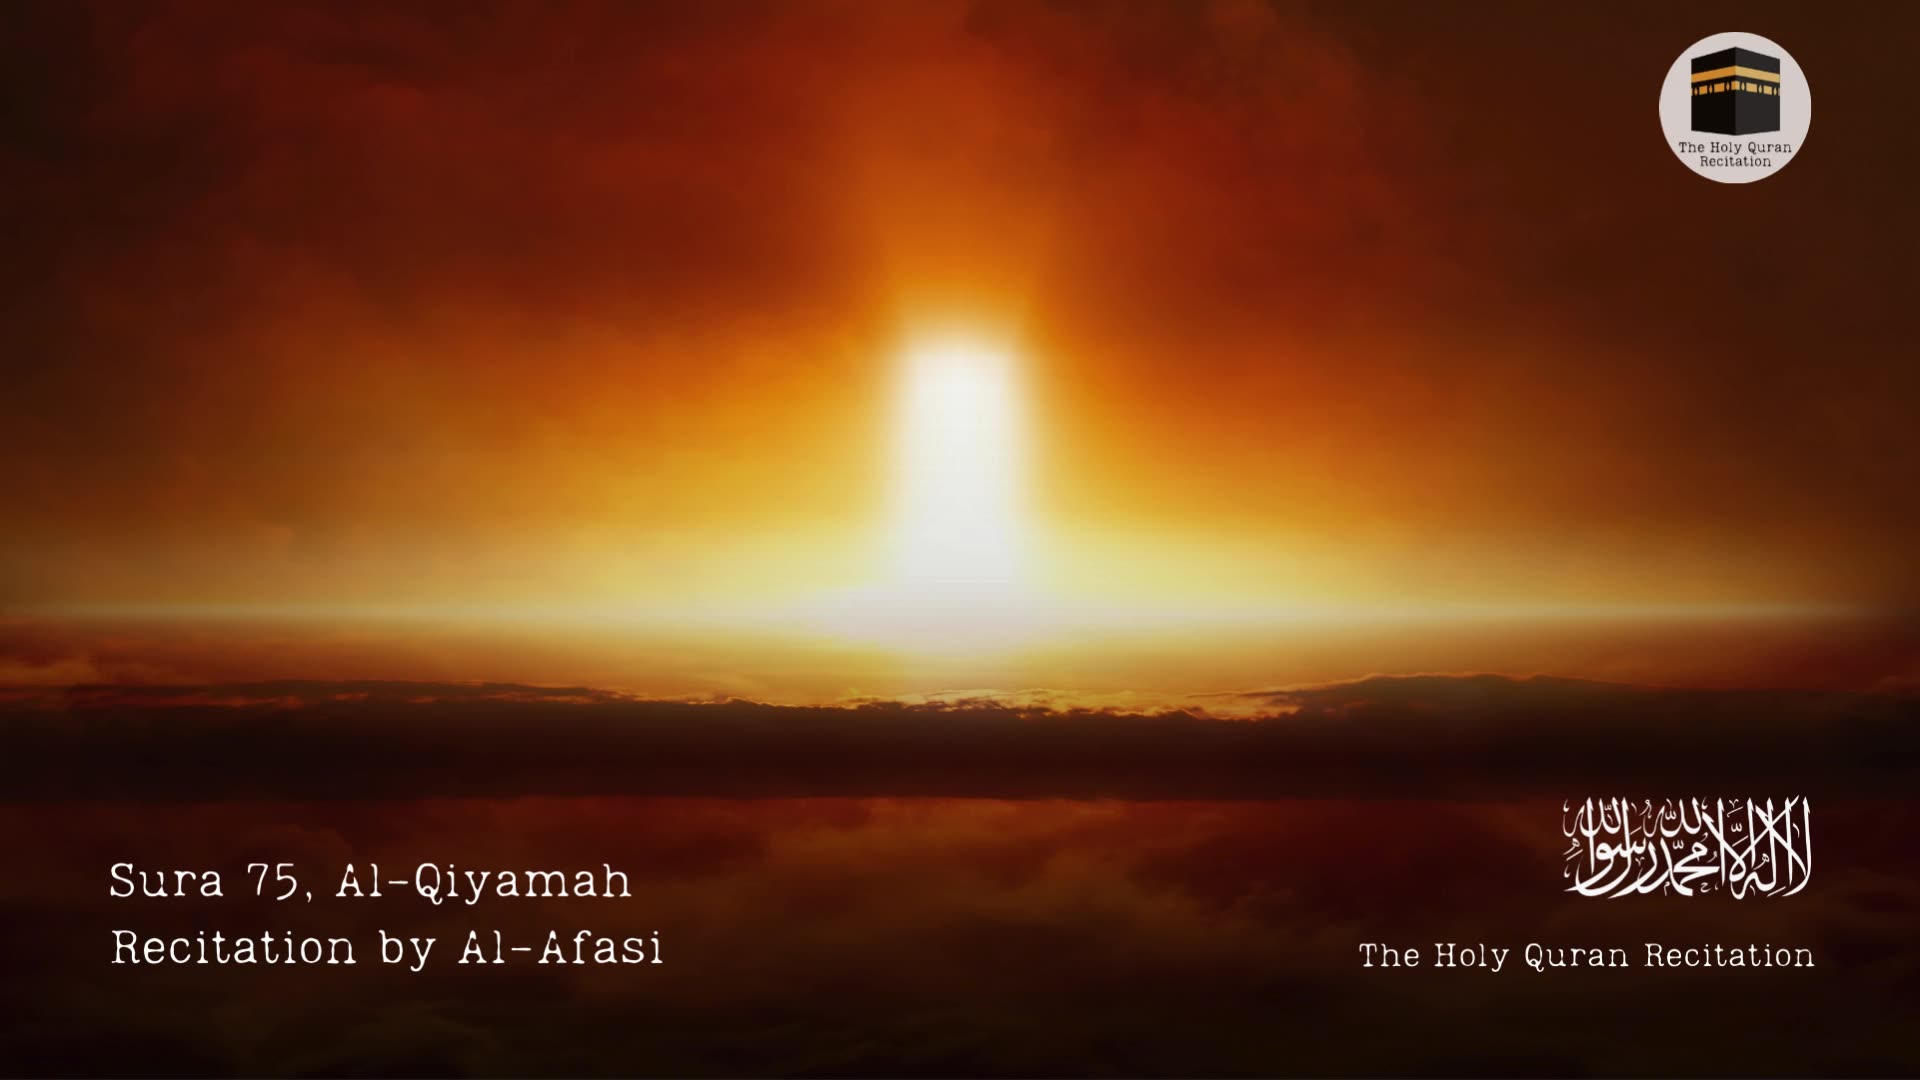 Holy Quran - Sura 75, Al-Qiyamah (The Resurrection) - Recitation by Al-Afasi